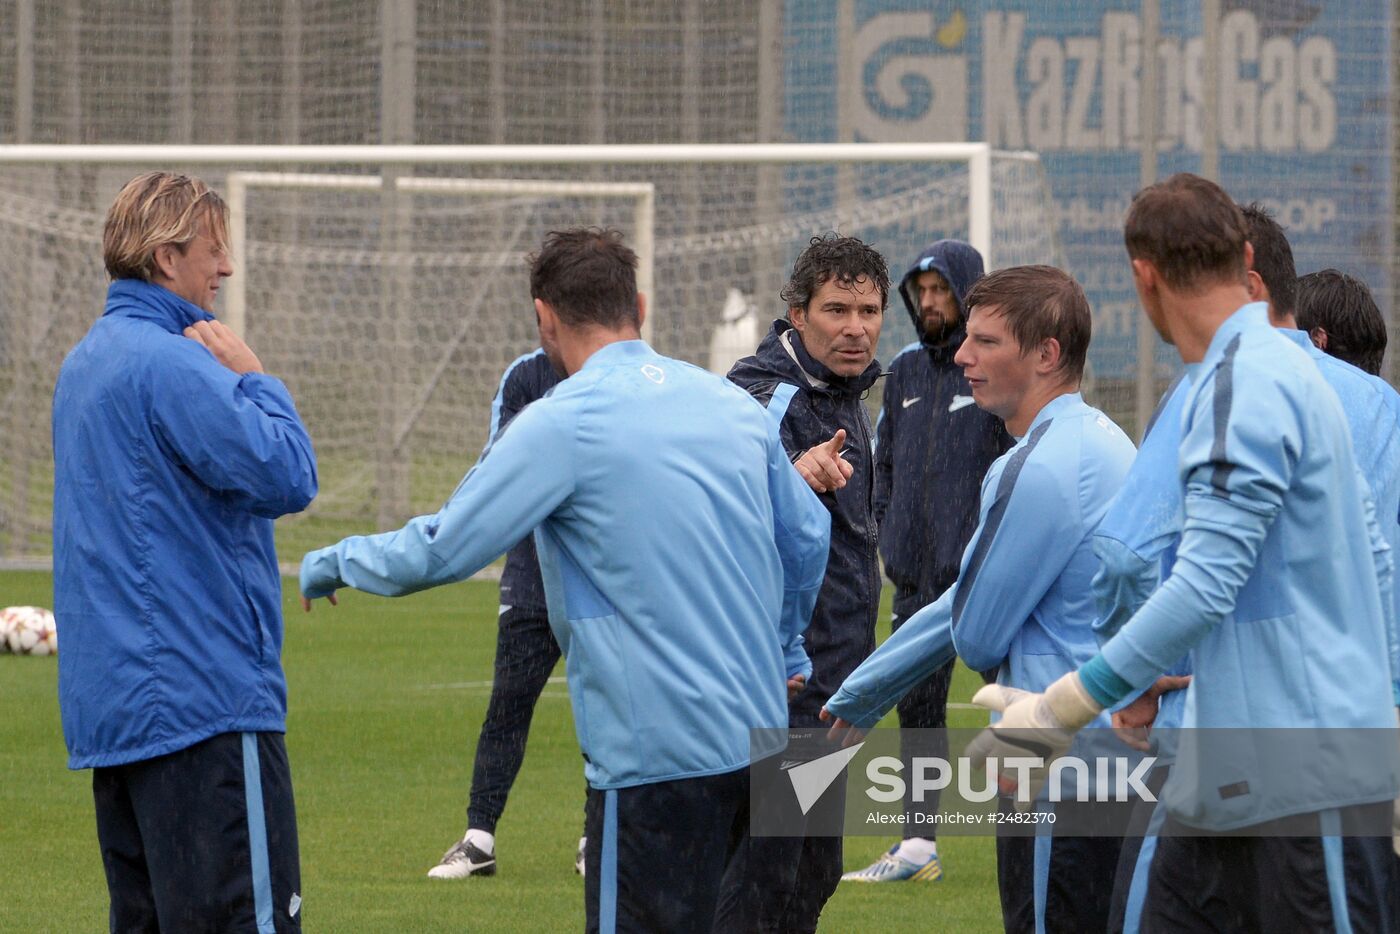 FC Zenit's training session before Champions League match against Belgium's Standard